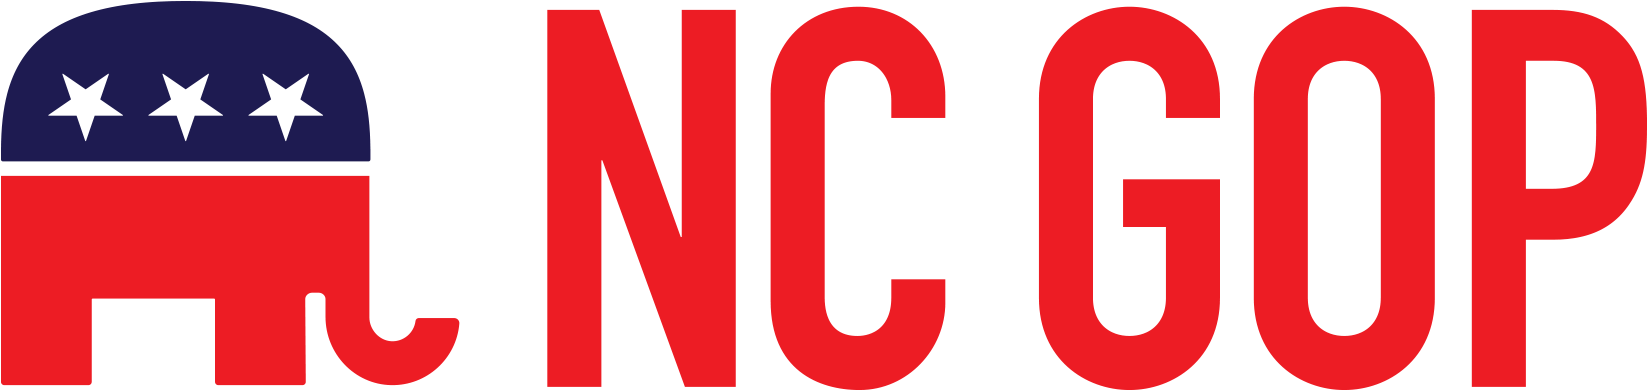 The Republican Party Of North Carolina - Nc Republican Party (1749x512)